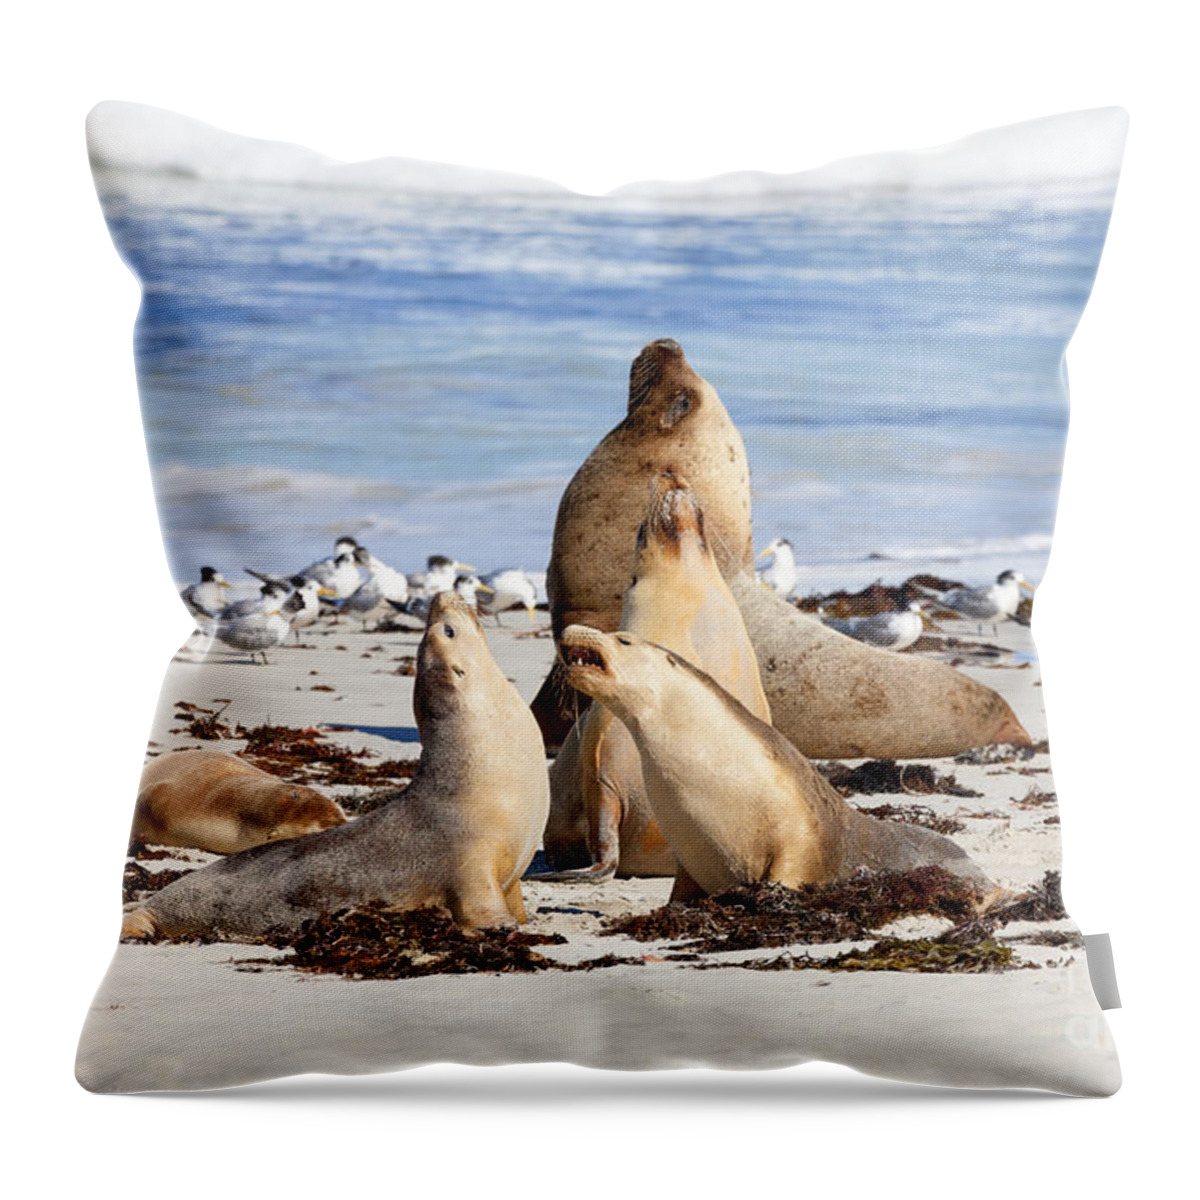 Sea Lions Throw Pillow featuring the photograph The Choir by Michael Dawson